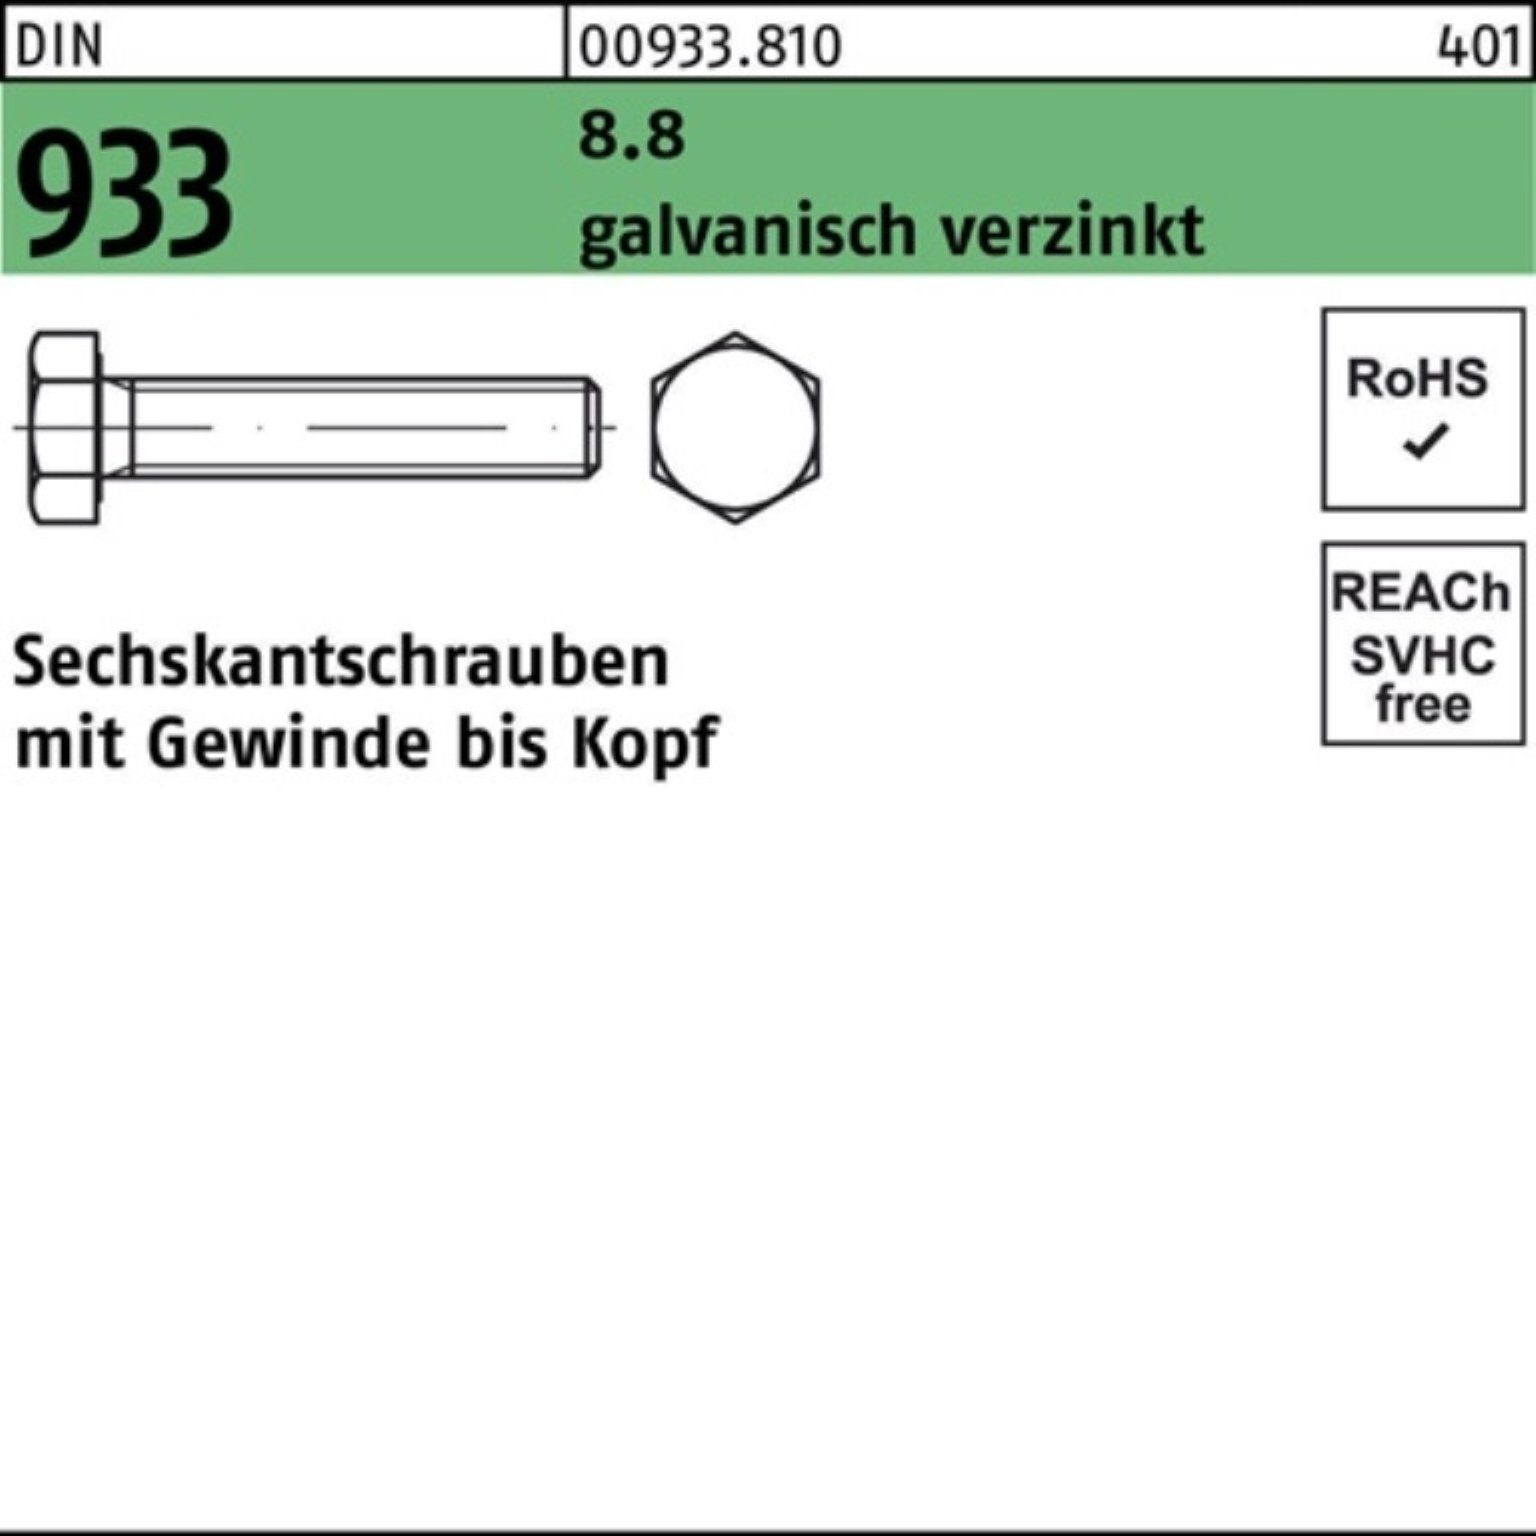 VG 65 DIN Stü M27x 933 10 galv.verz. Sechskantschraube Pack 100er Reyher 8.8 Sechskantschraube